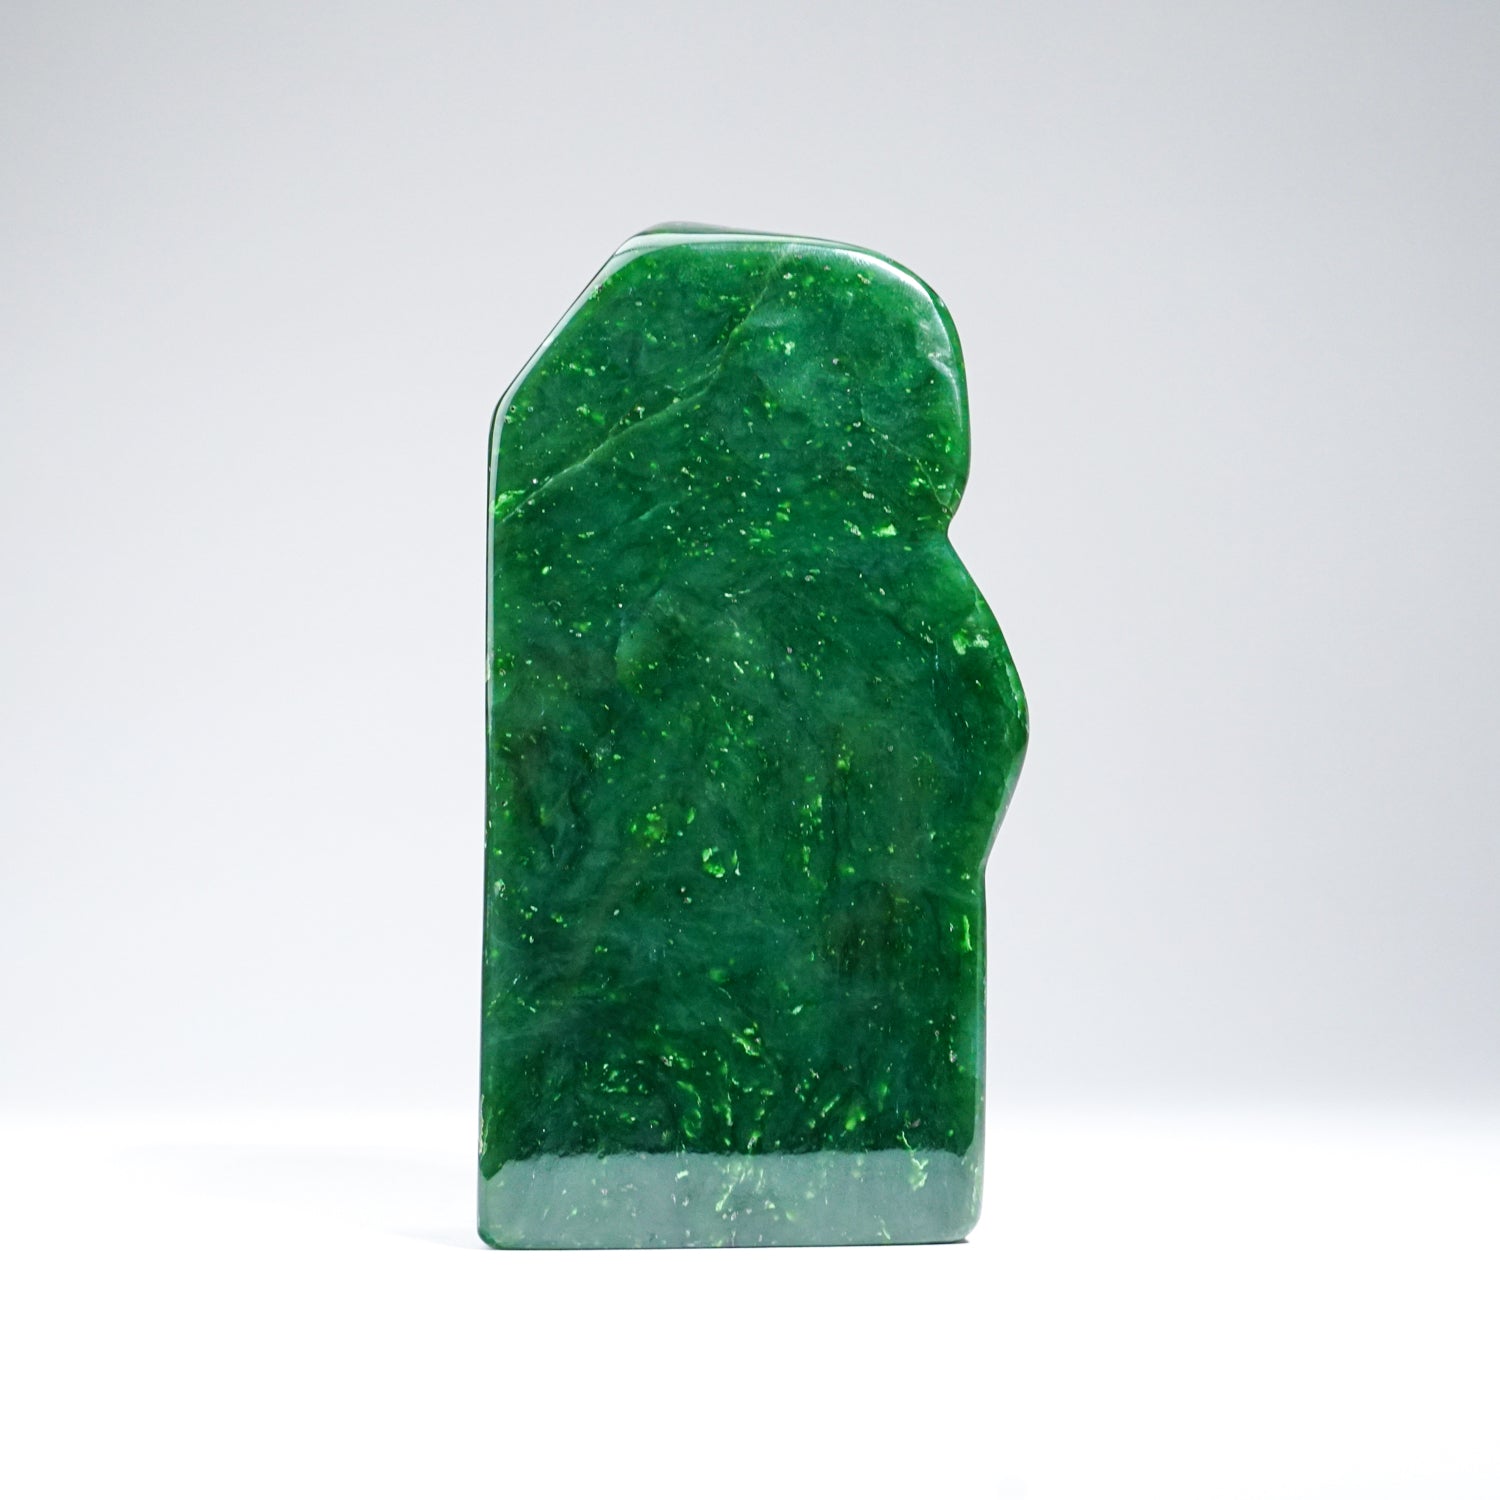 Polished Nephrite Jade Freeform from Pakistan (4.4 lbs)